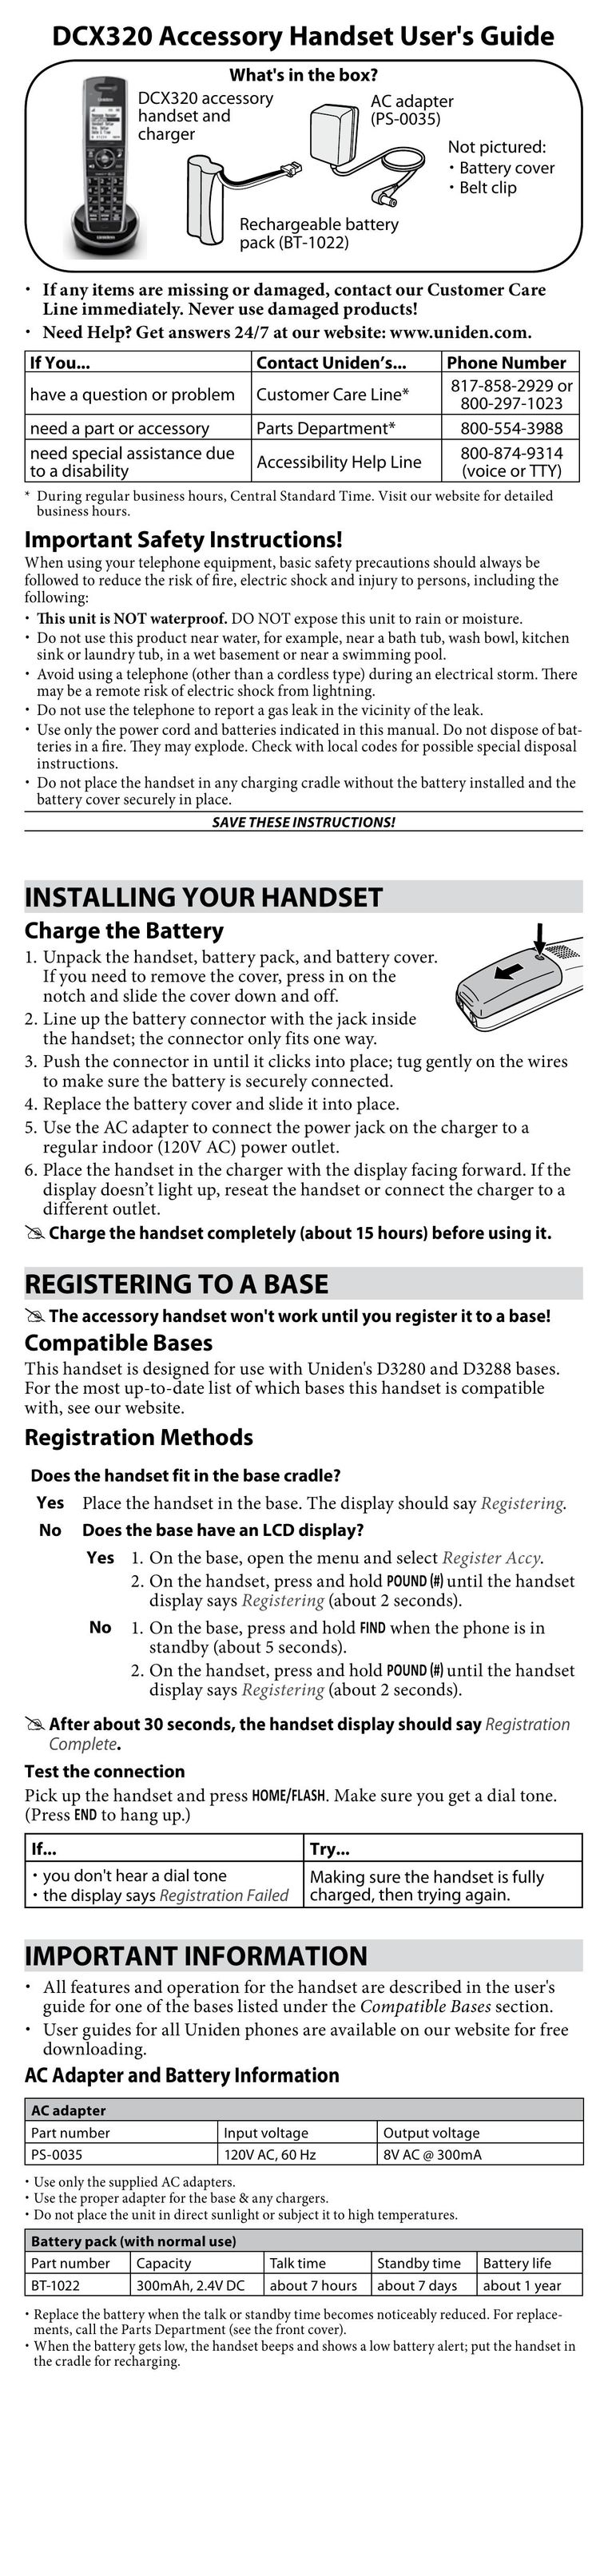 Uniden DCX320 Telephone User Manual